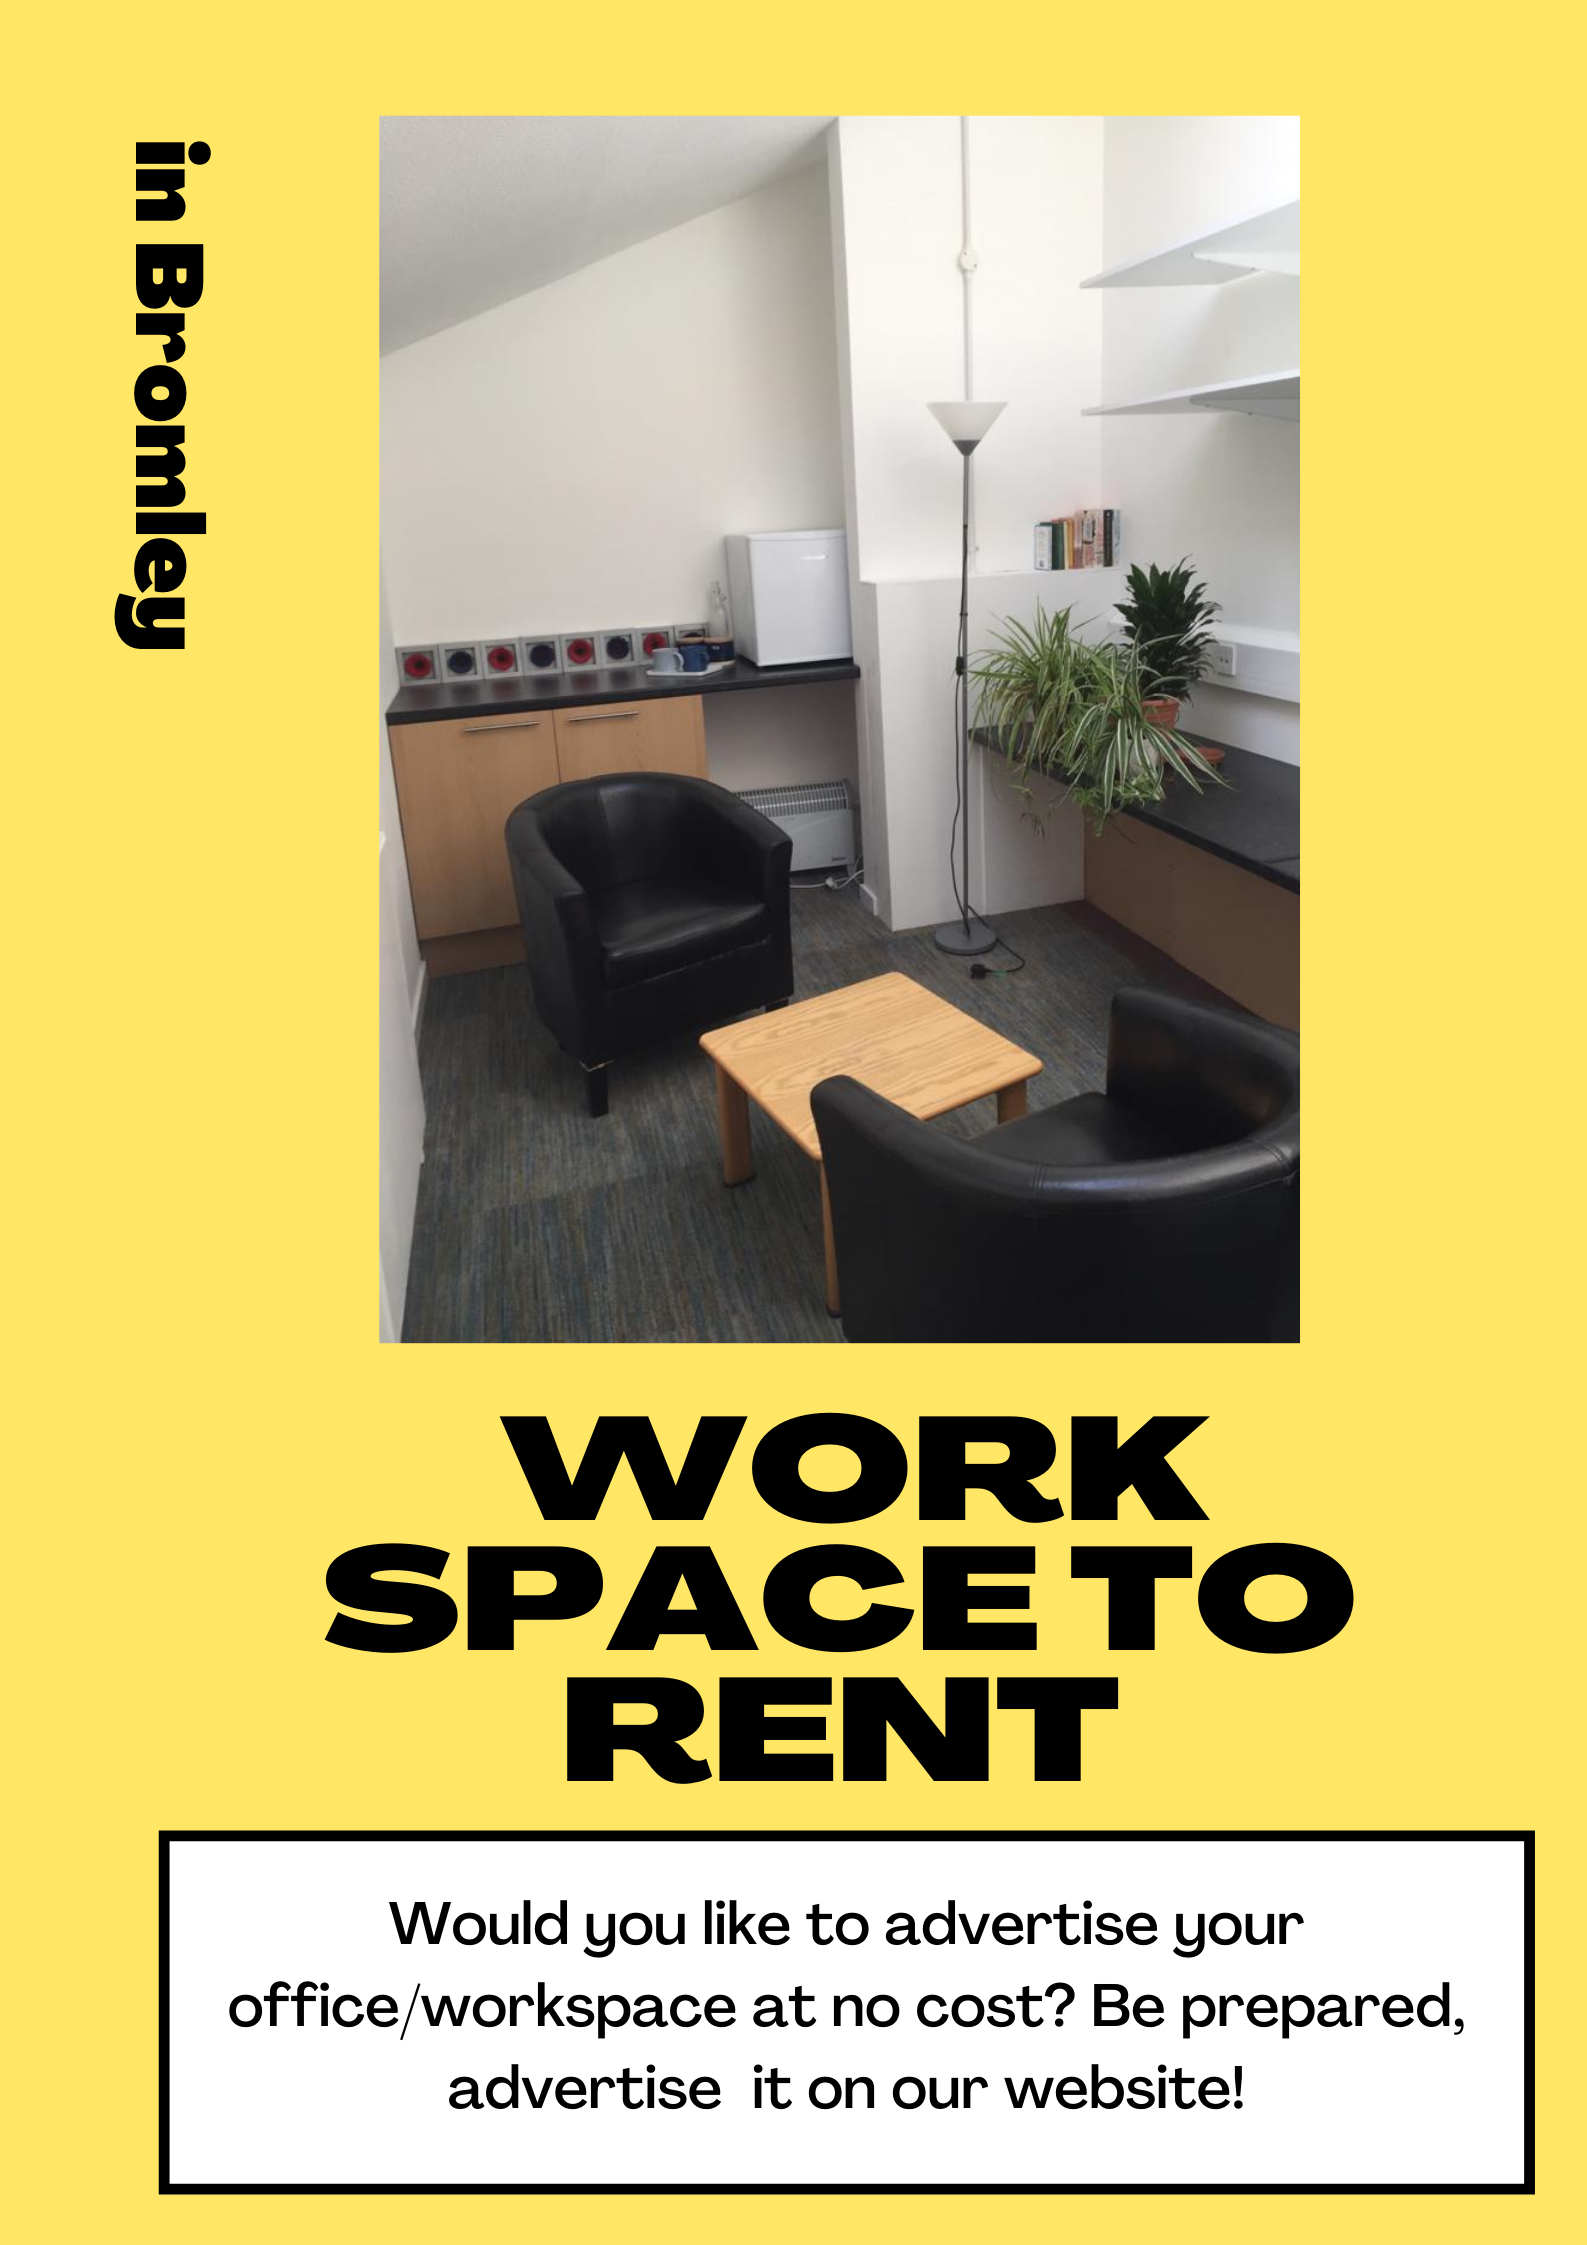 Venue hire poster (yellow)